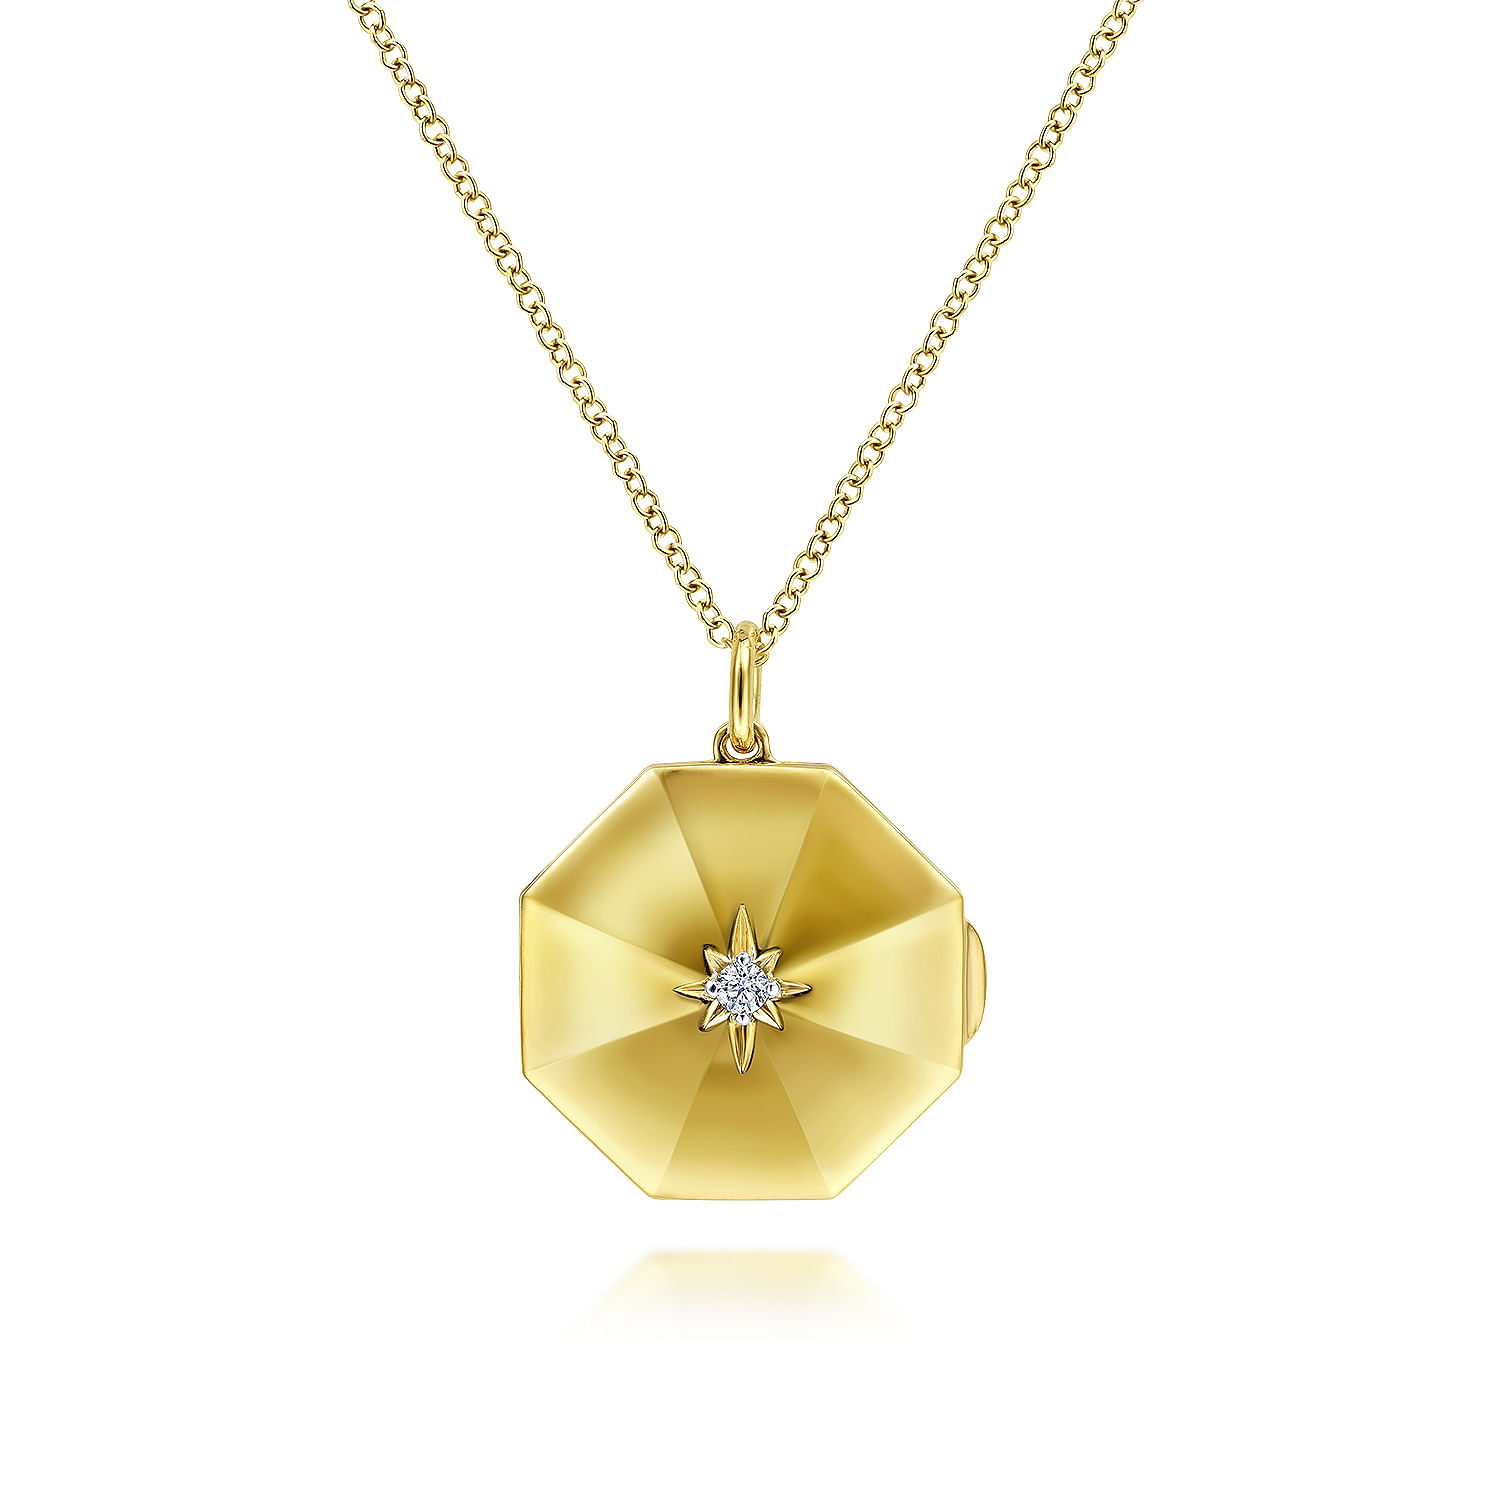 14K Yellow Gold Octagonal Locket Necklace with Diamond Star Center